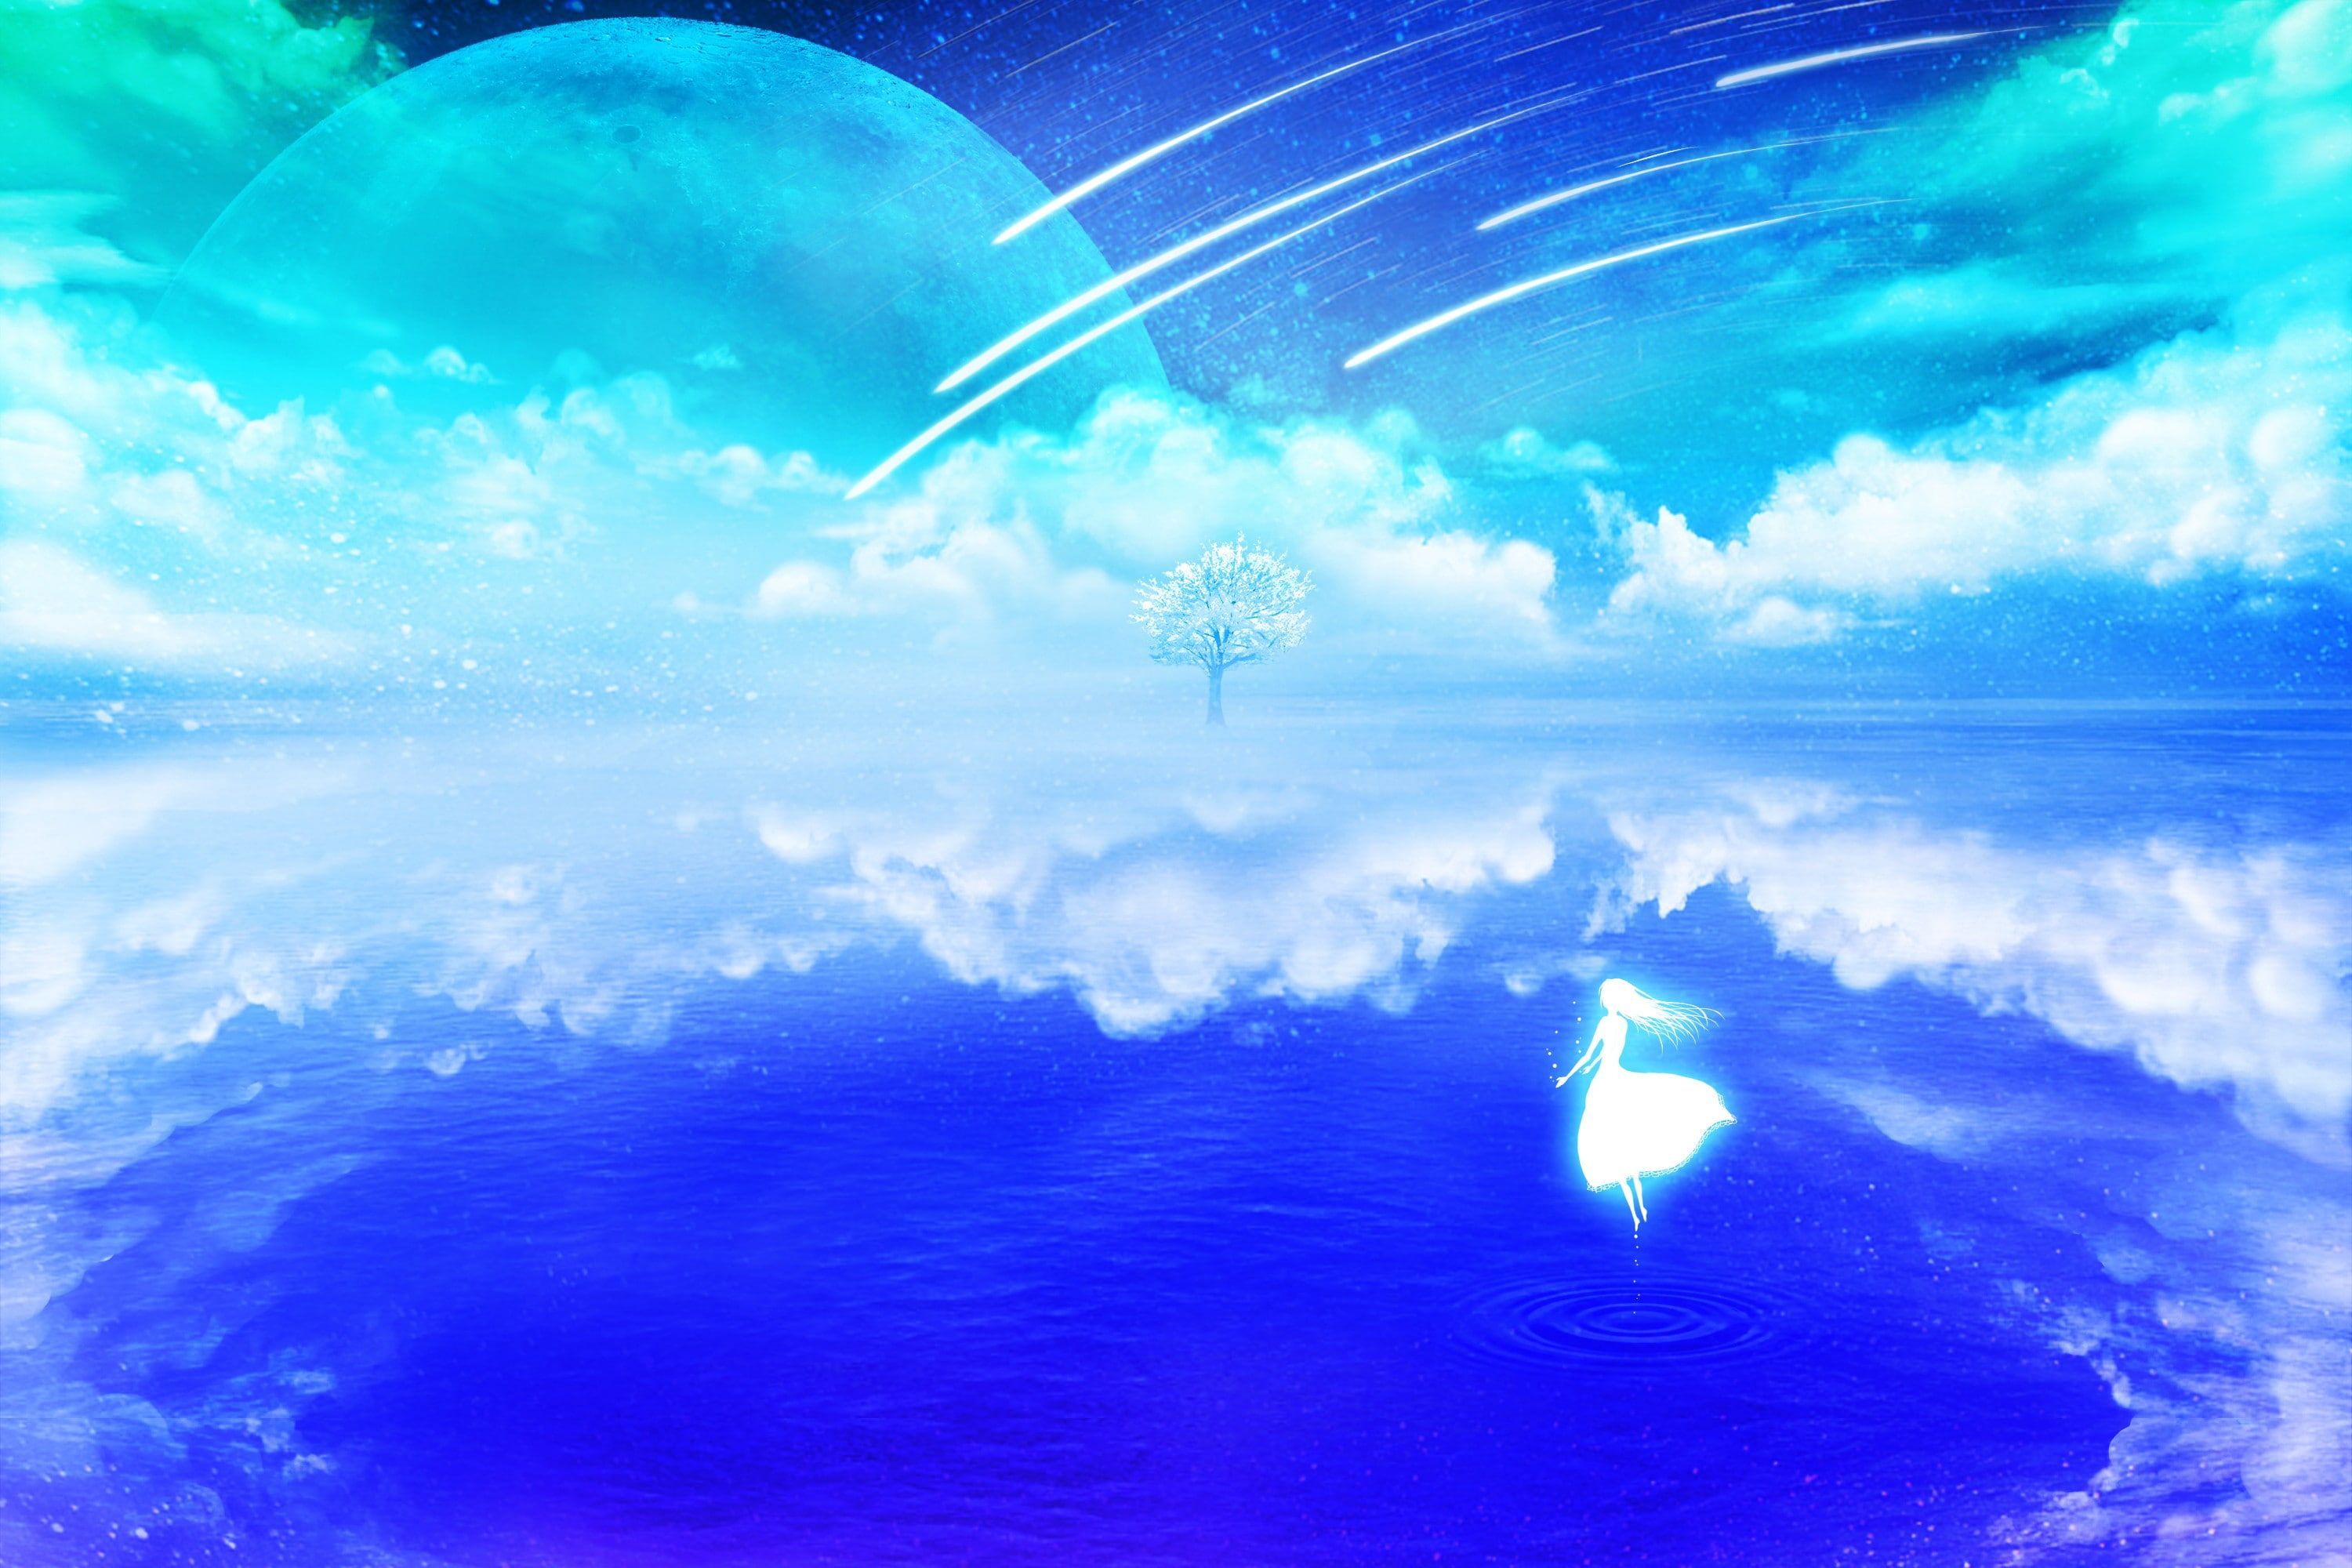 sky #water #reflection #anime #clouds #stars #planet K #wallpaper #hdwallpaper #desktop. Anime scenery, Star destroyer wallpaper, Anime background